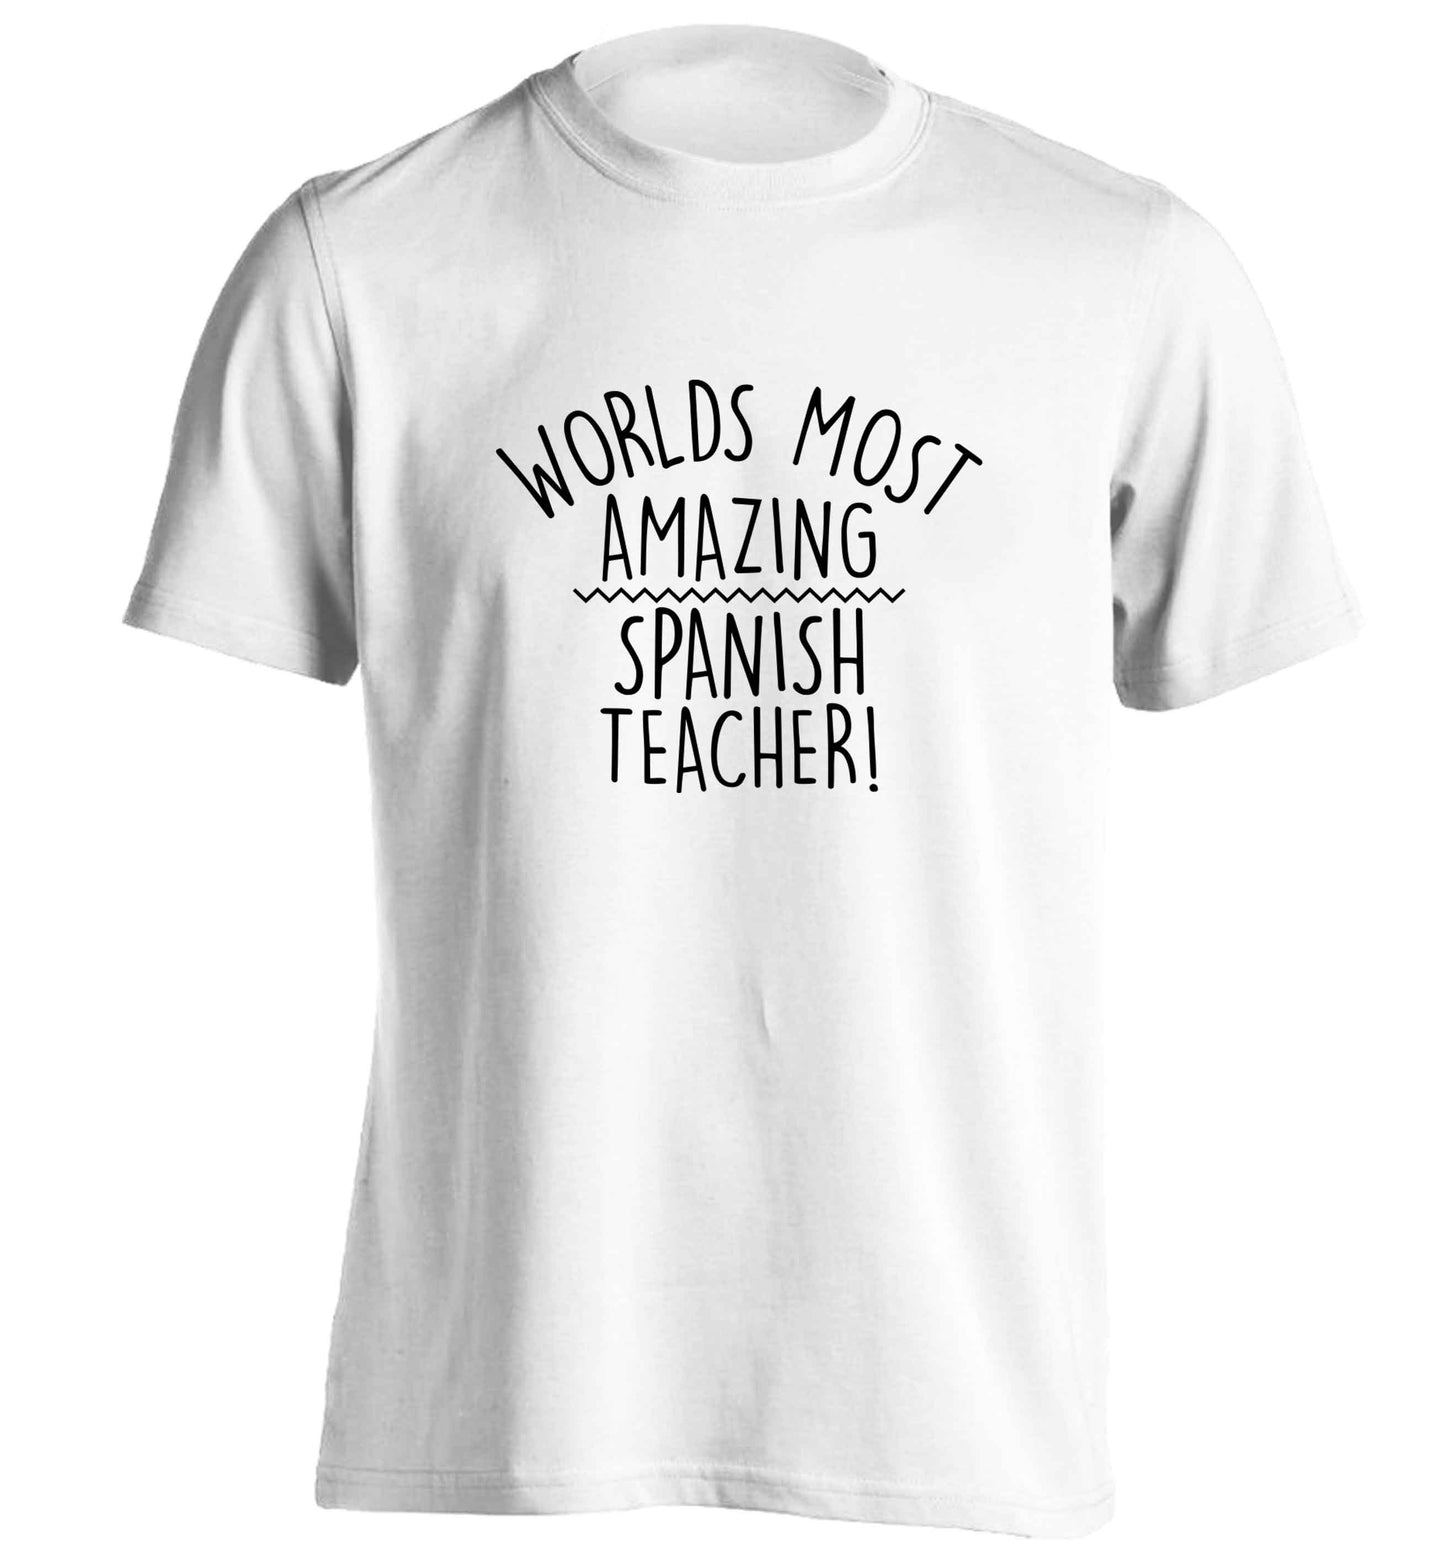 Worlds most amazing Spanish teacher adults unisex white Tshirt 2XL